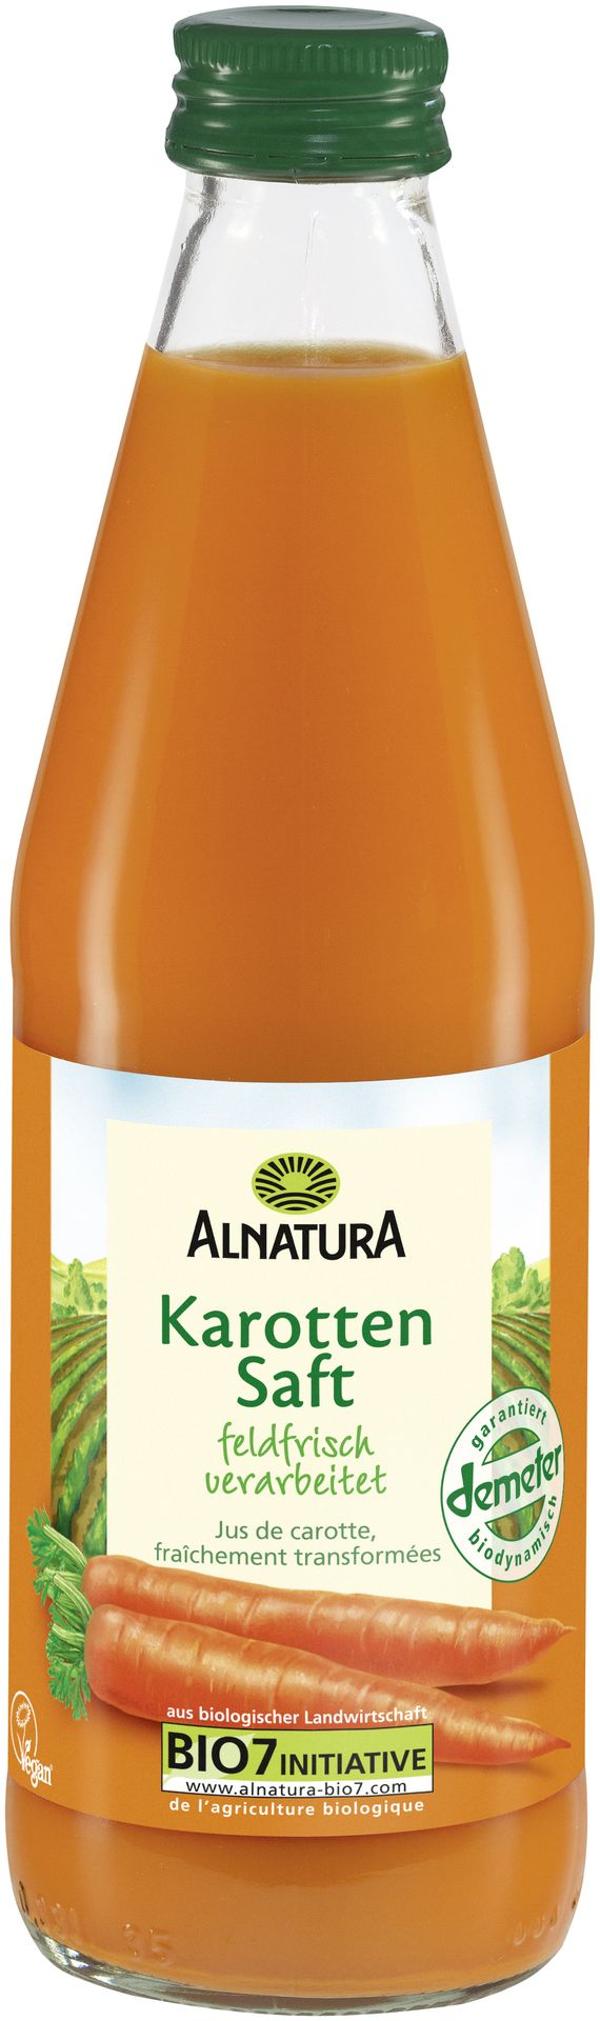 Produktfoto zu Karottensaft feldfrisch 330 ml Alnatura